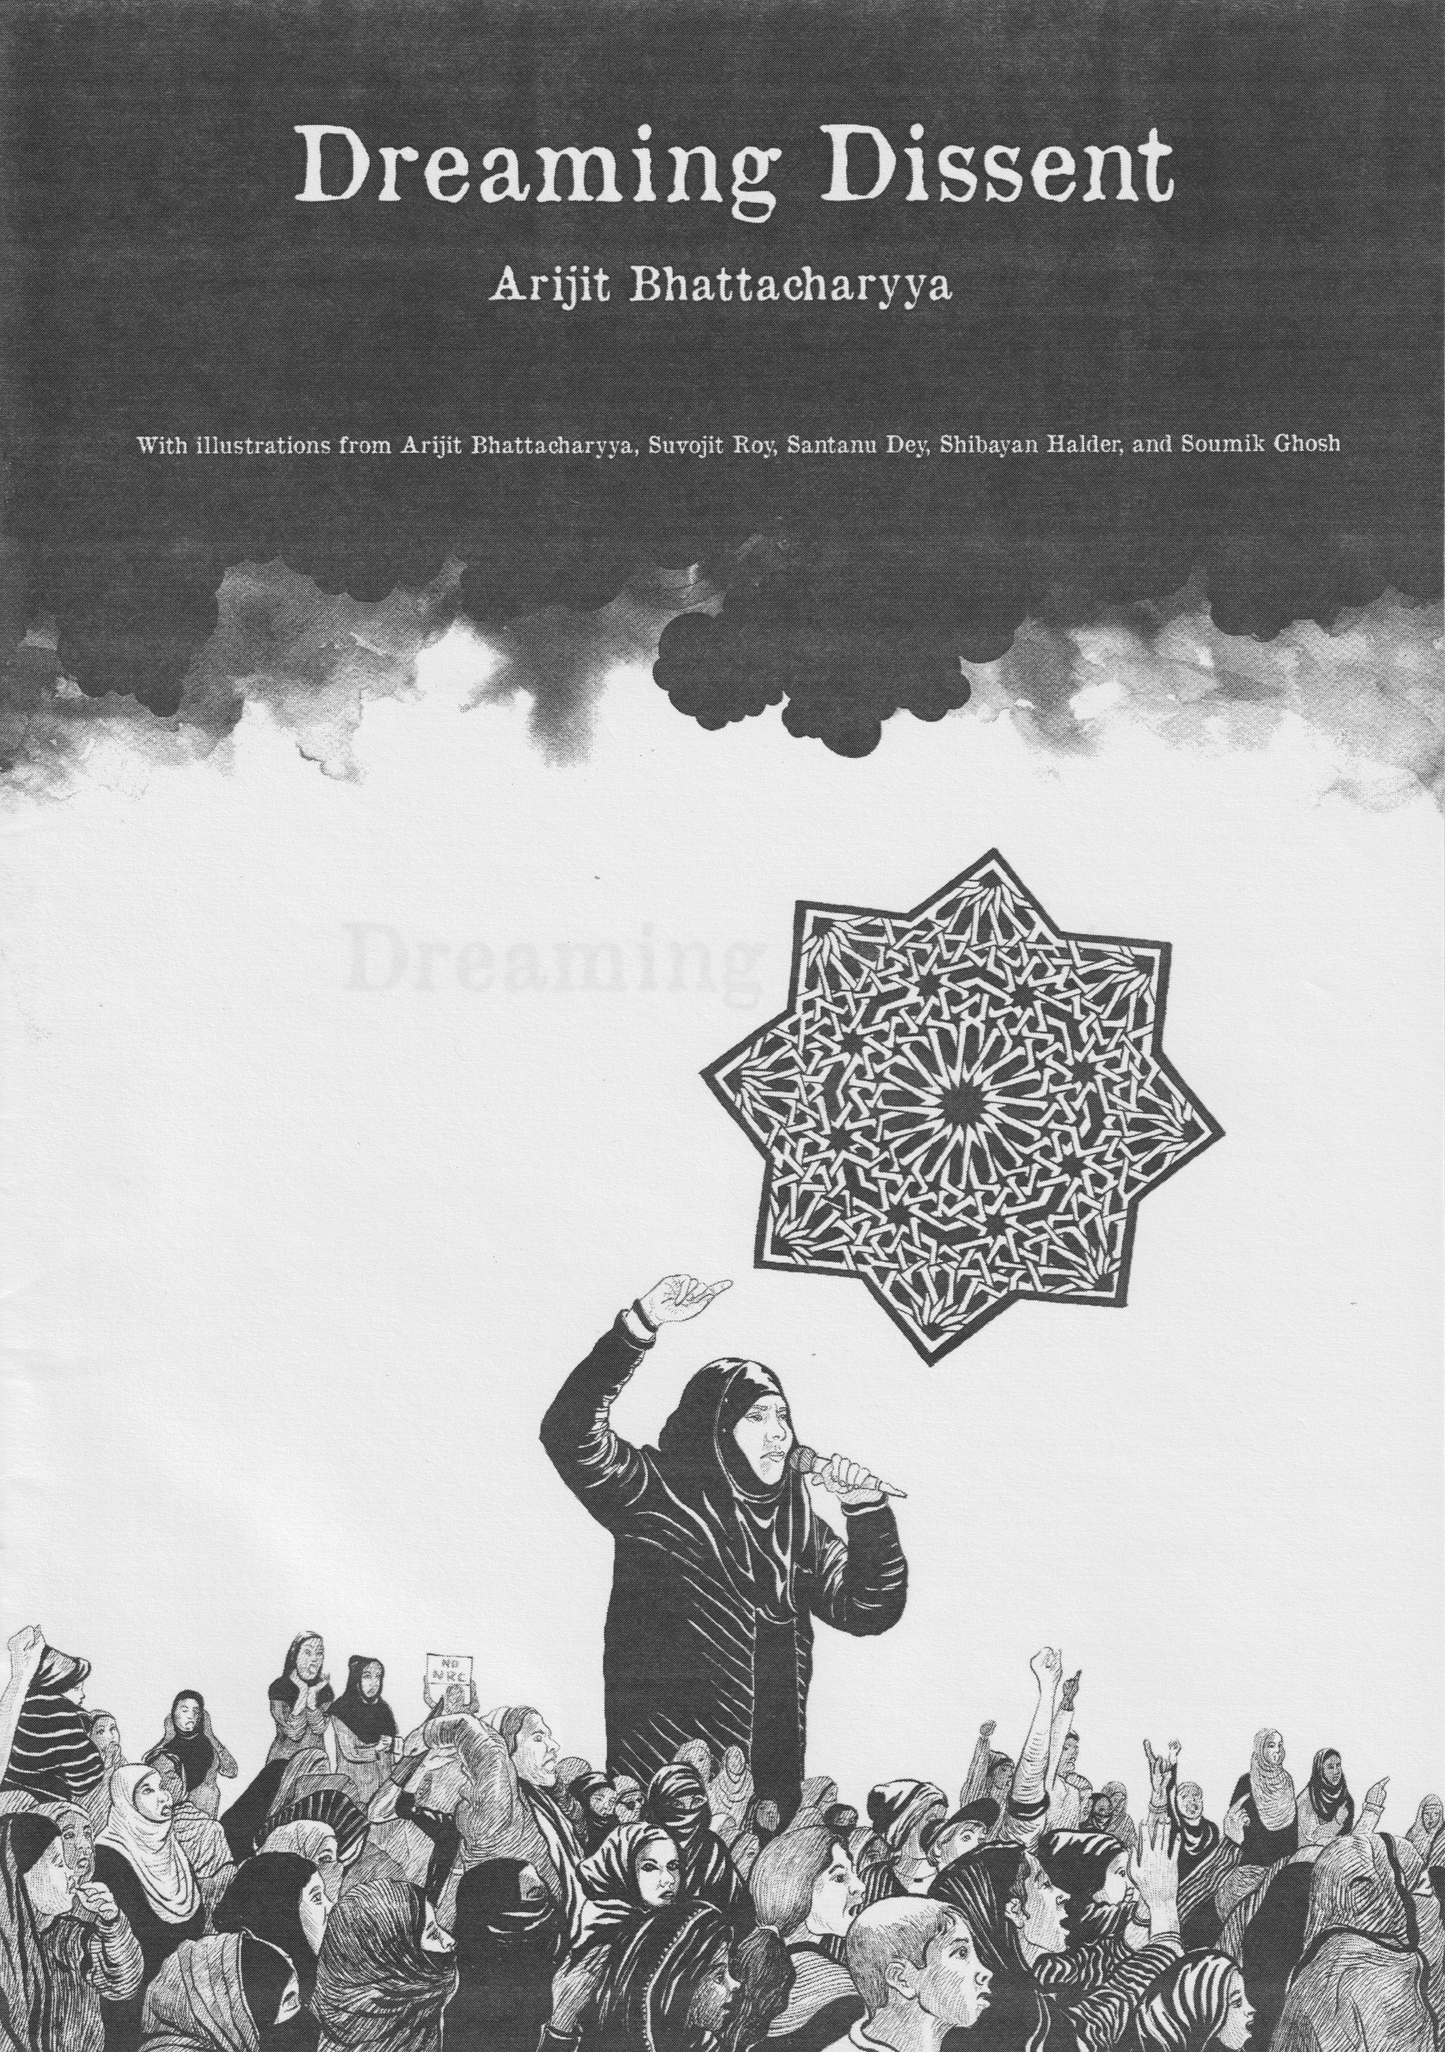 Dreaming Dissent, by Arijit Bhattacharyya